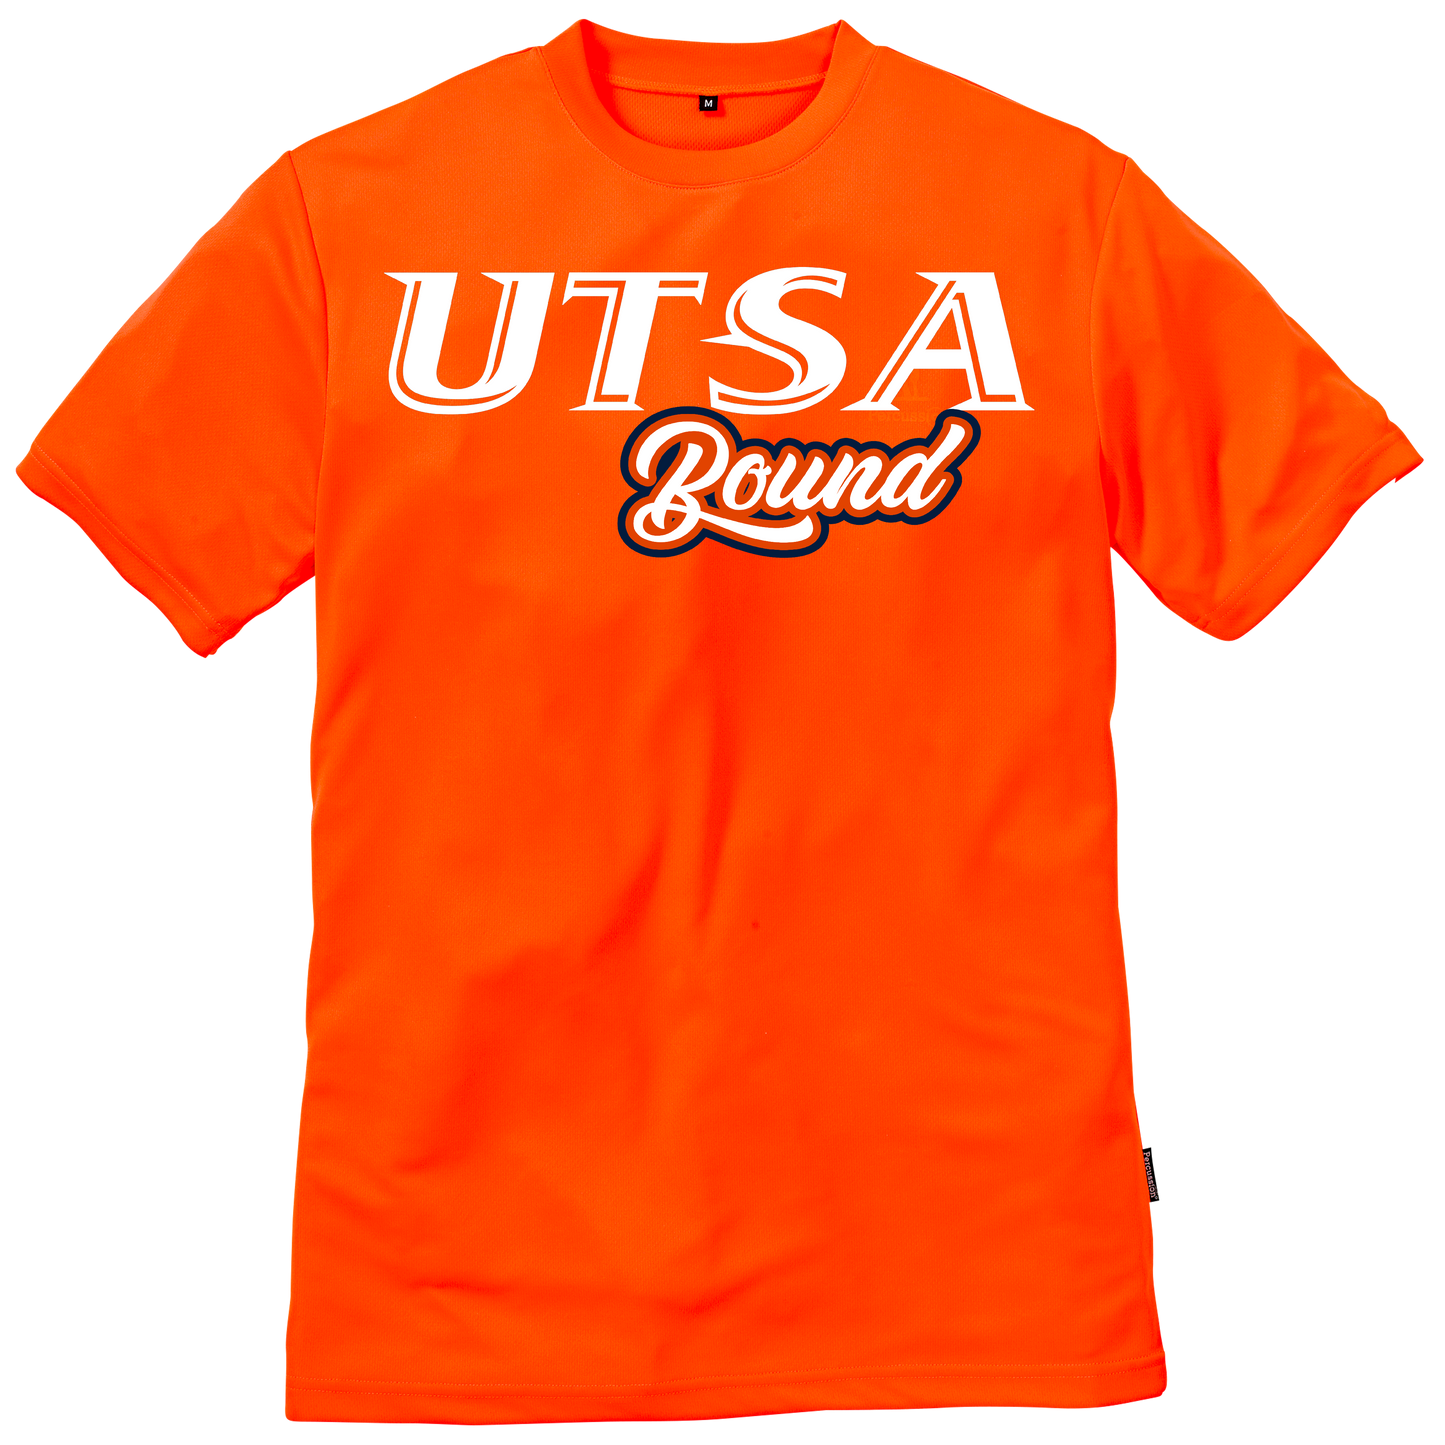 UTSA Bound Freshman Shirts